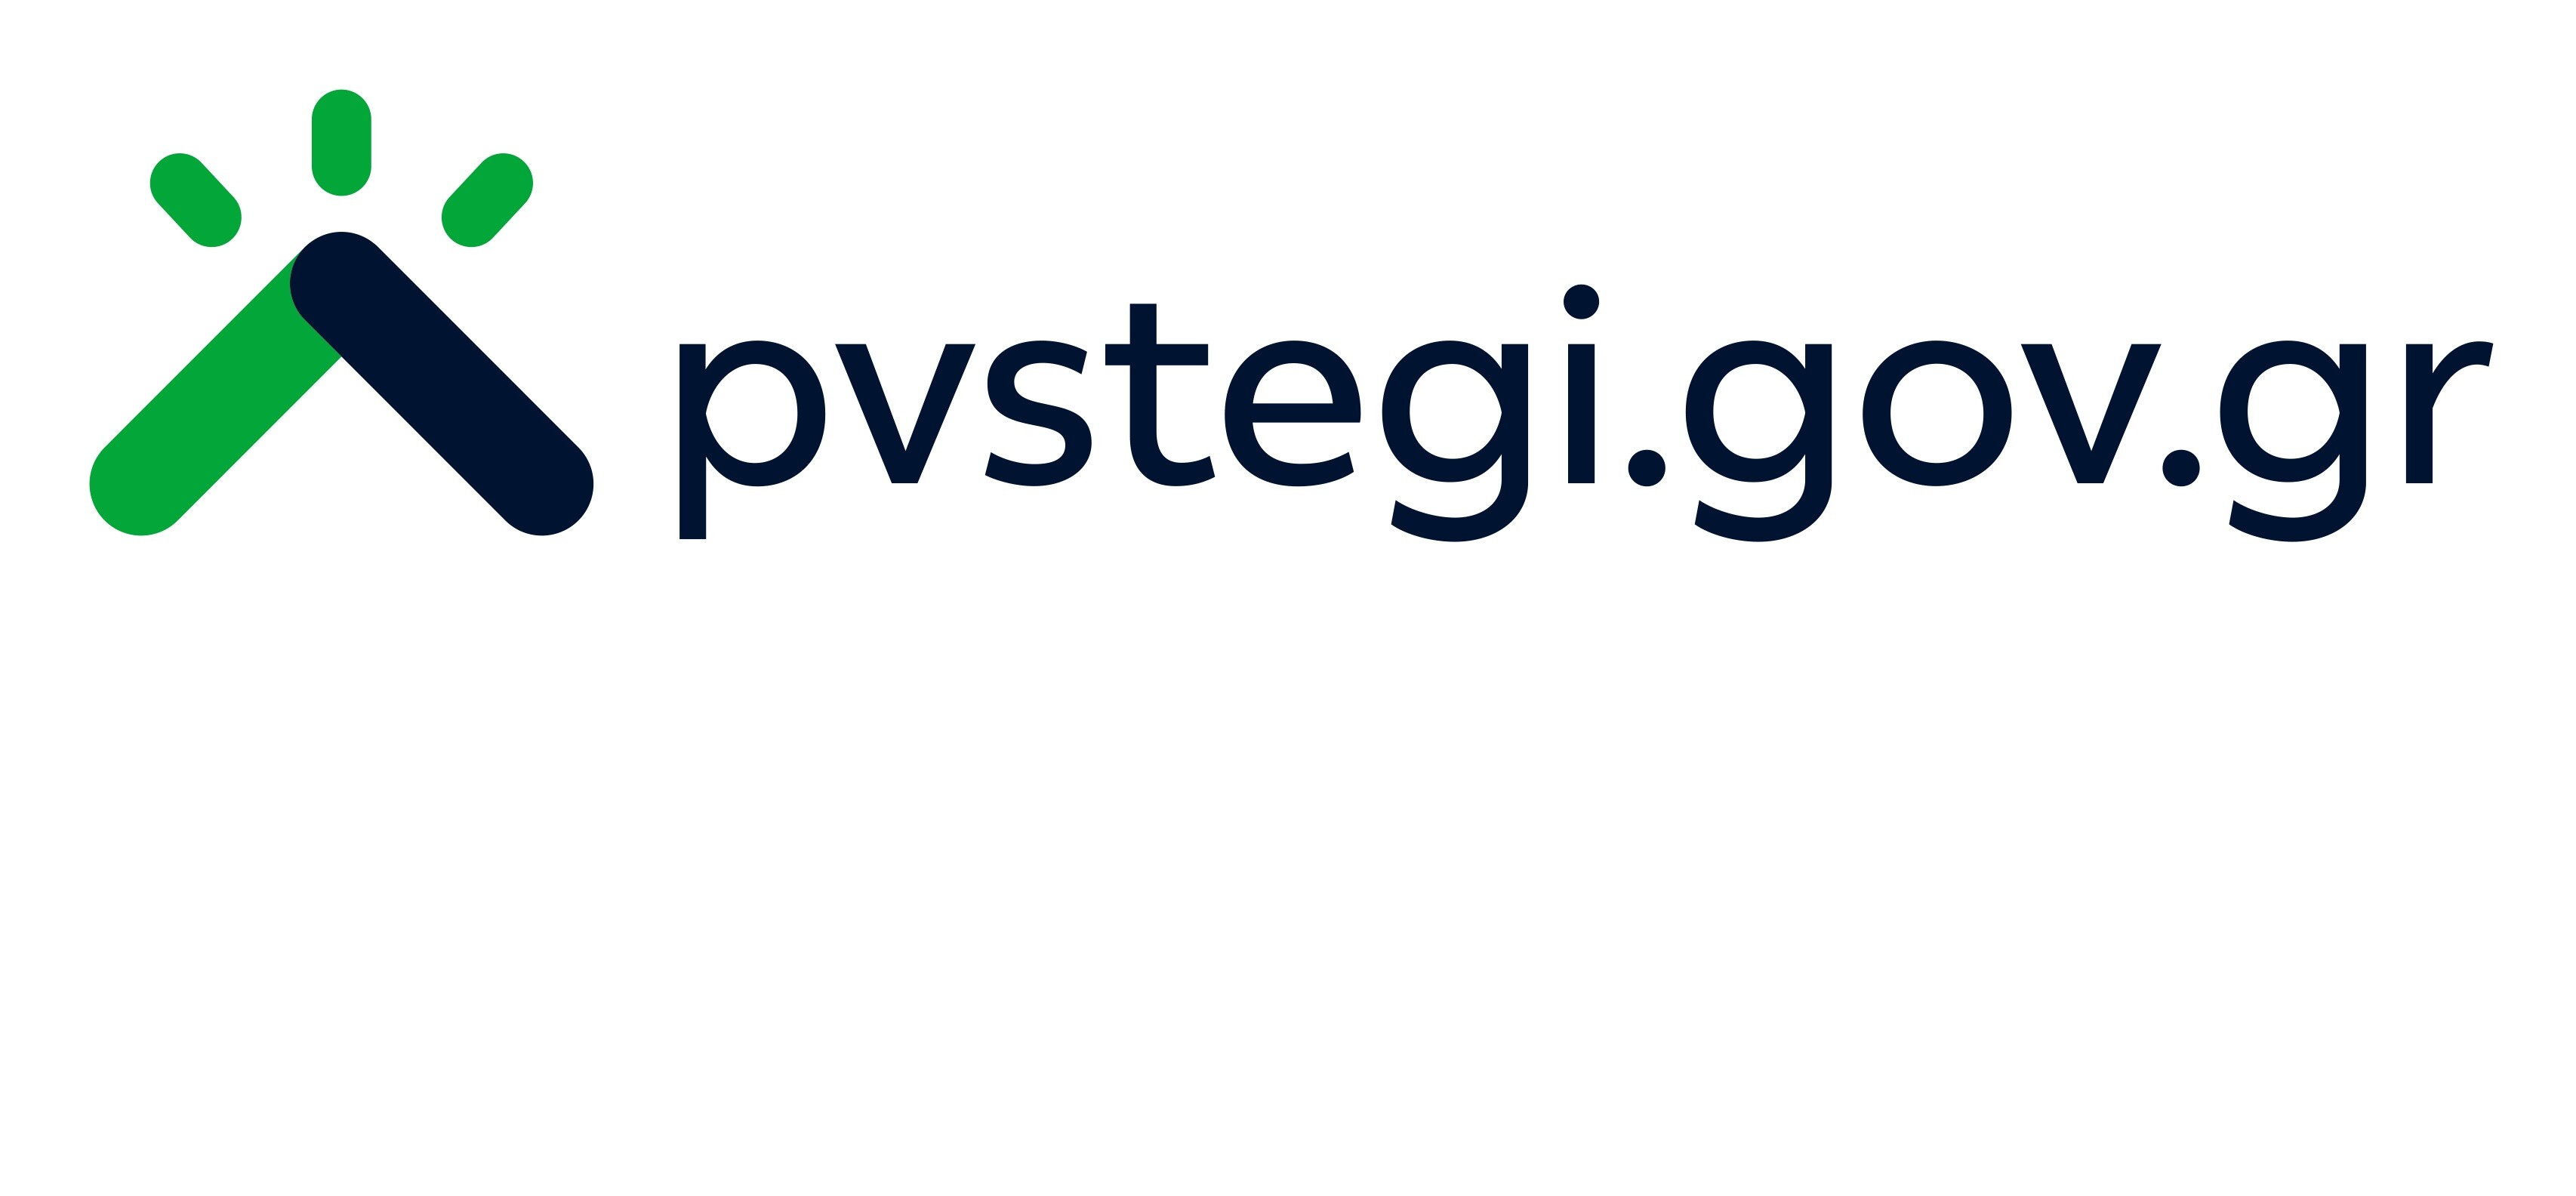 More information about "Ανακοίνωση ΔΕΔΗΕ για την ηλεκτρονική πληρωμή τέλους σύνδεσης μέσω της πλατφόρμας pvstegi"